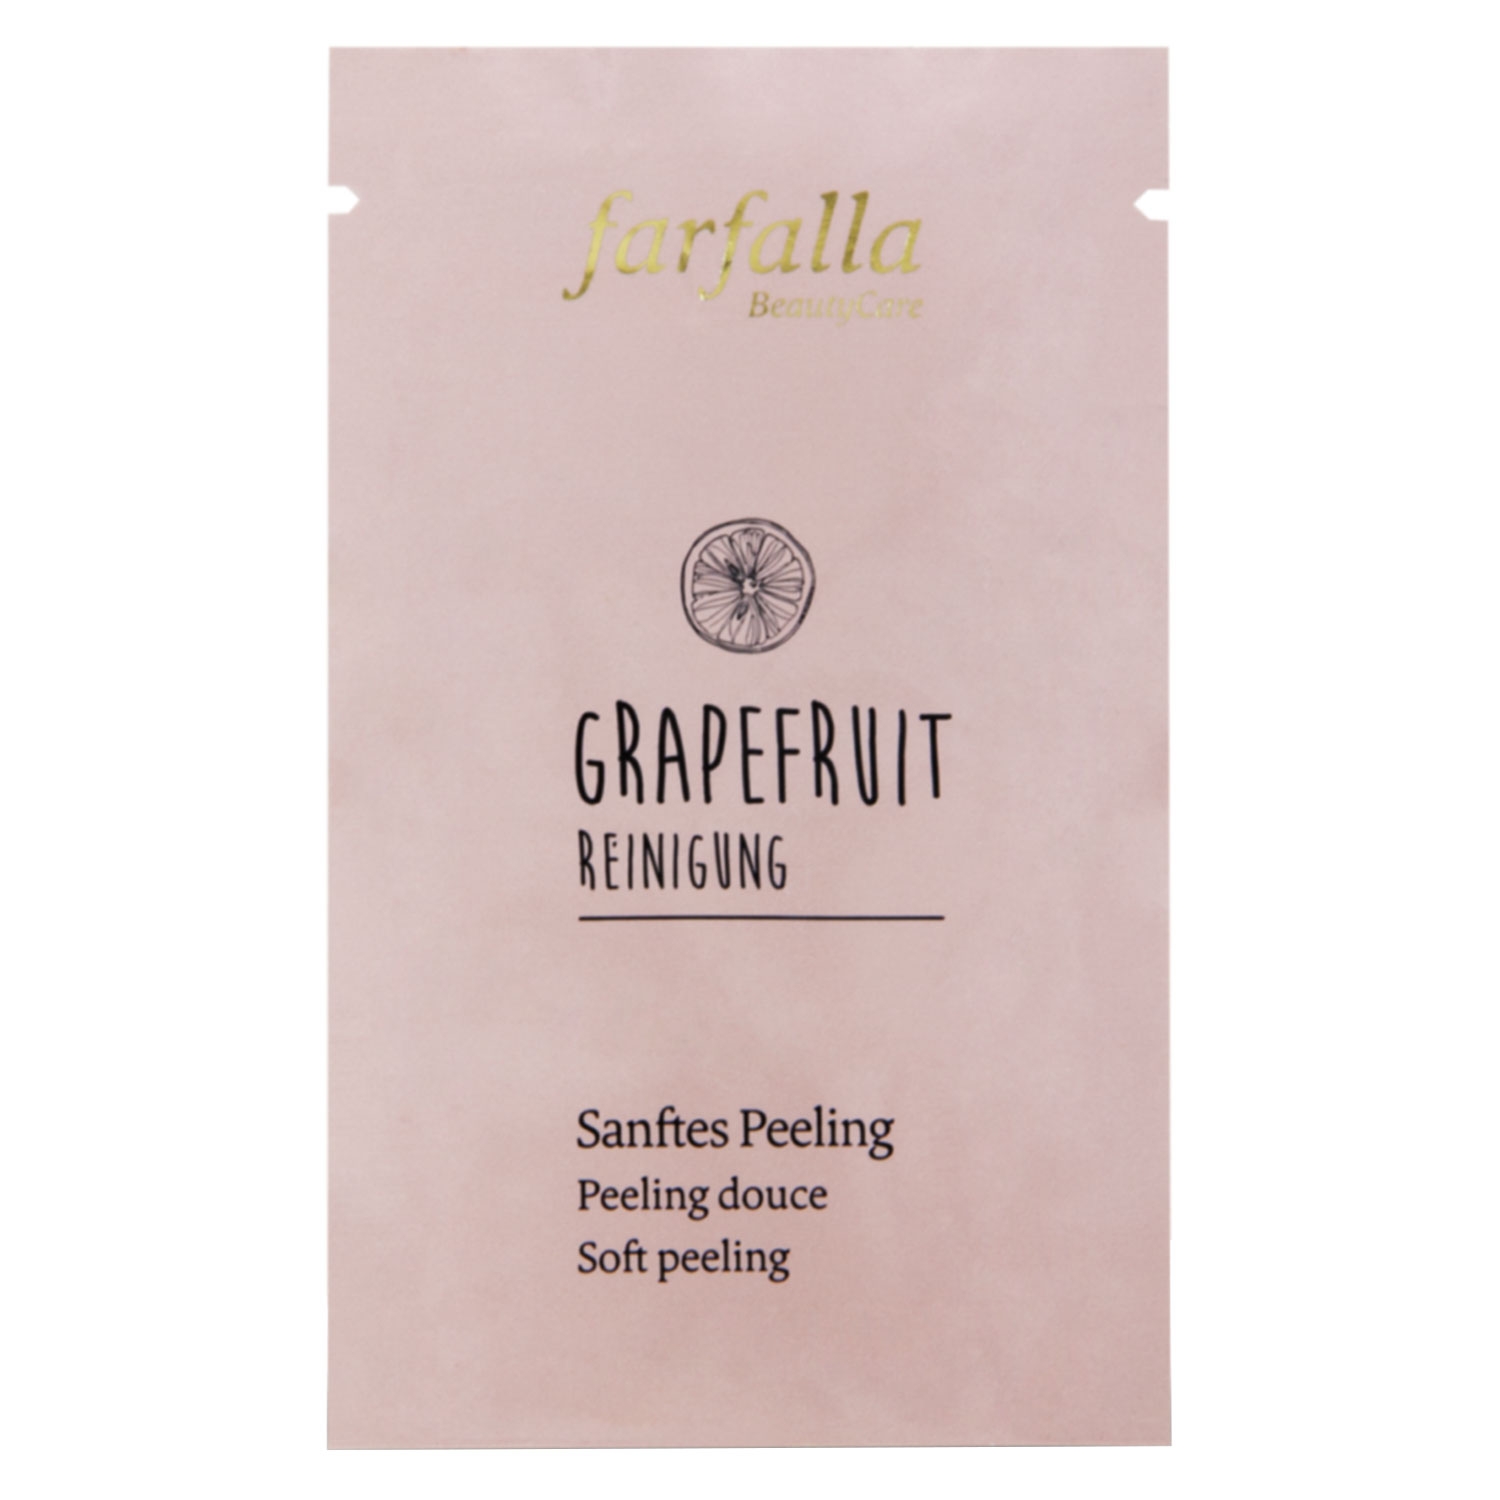 Product image from Grapefruit Reinigung - Sanftes Peeling